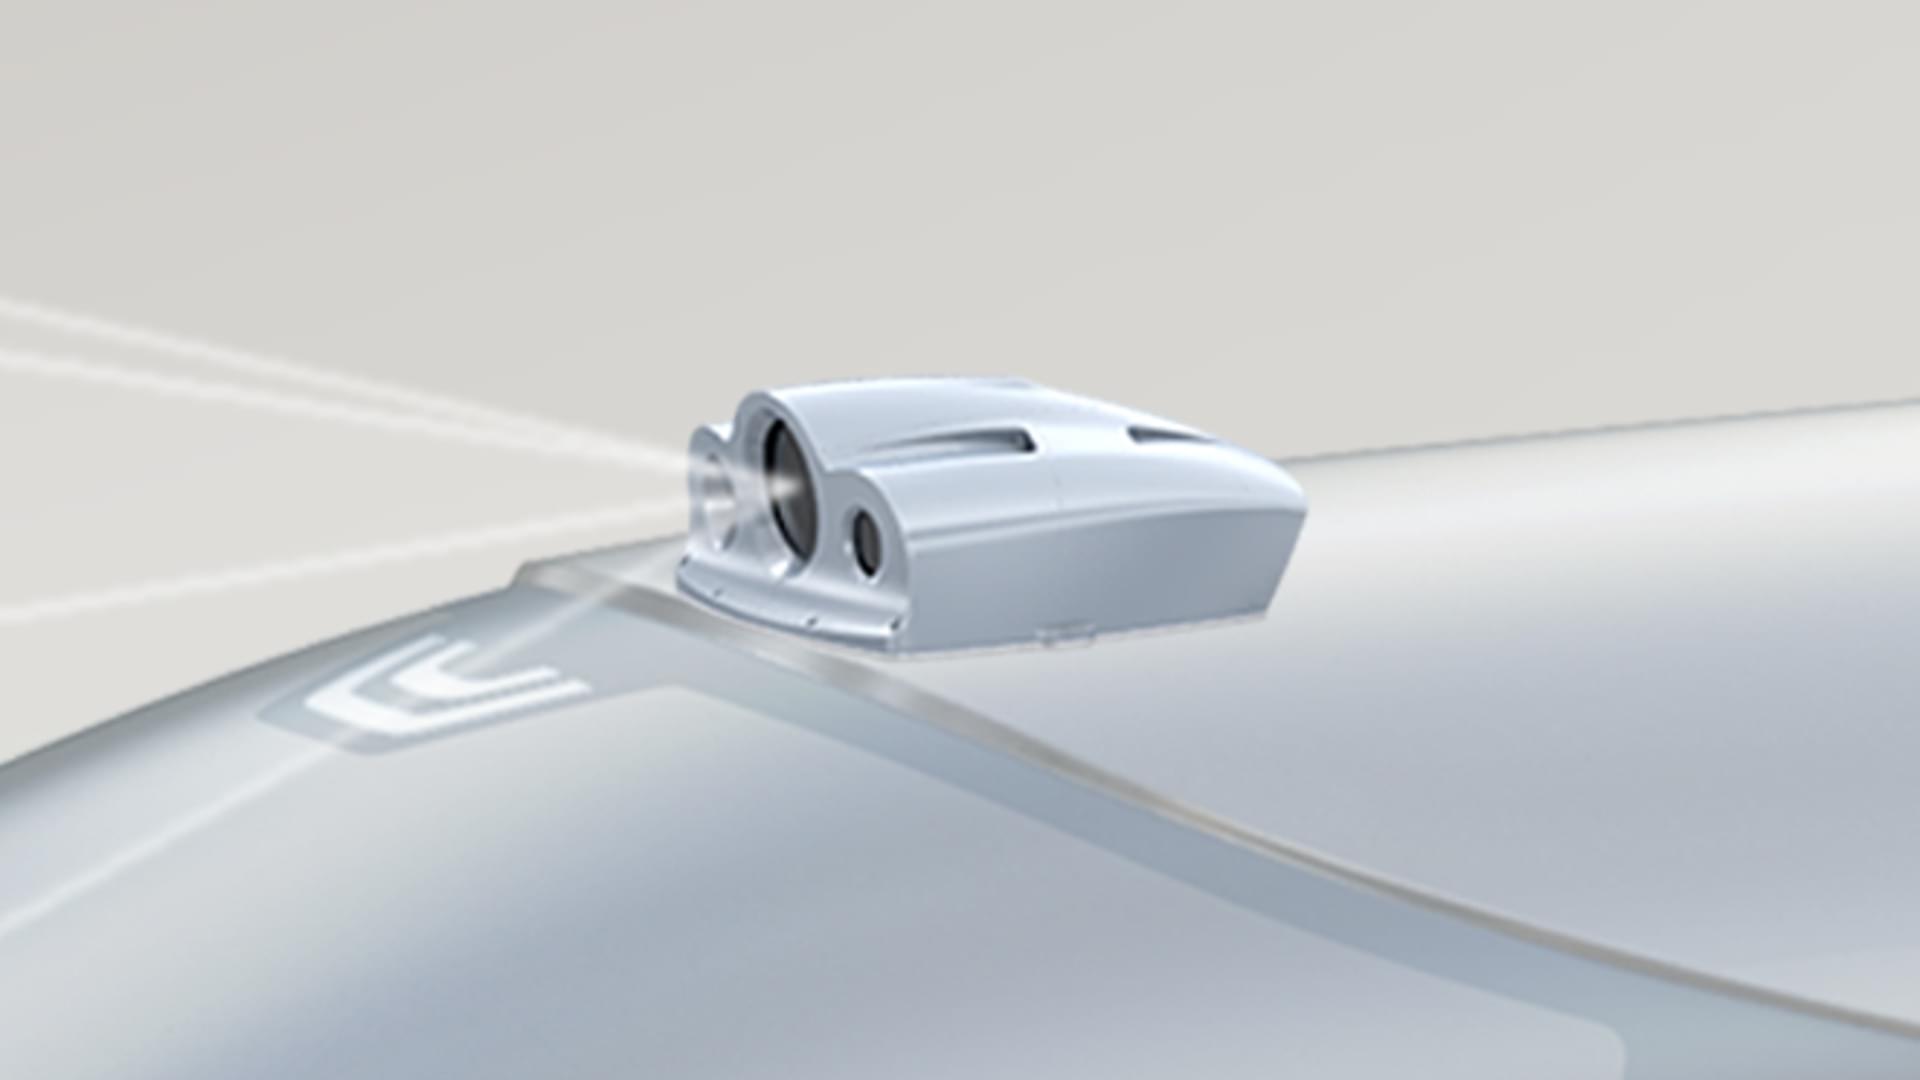 Digital Solution "Rail Vision Kamera"